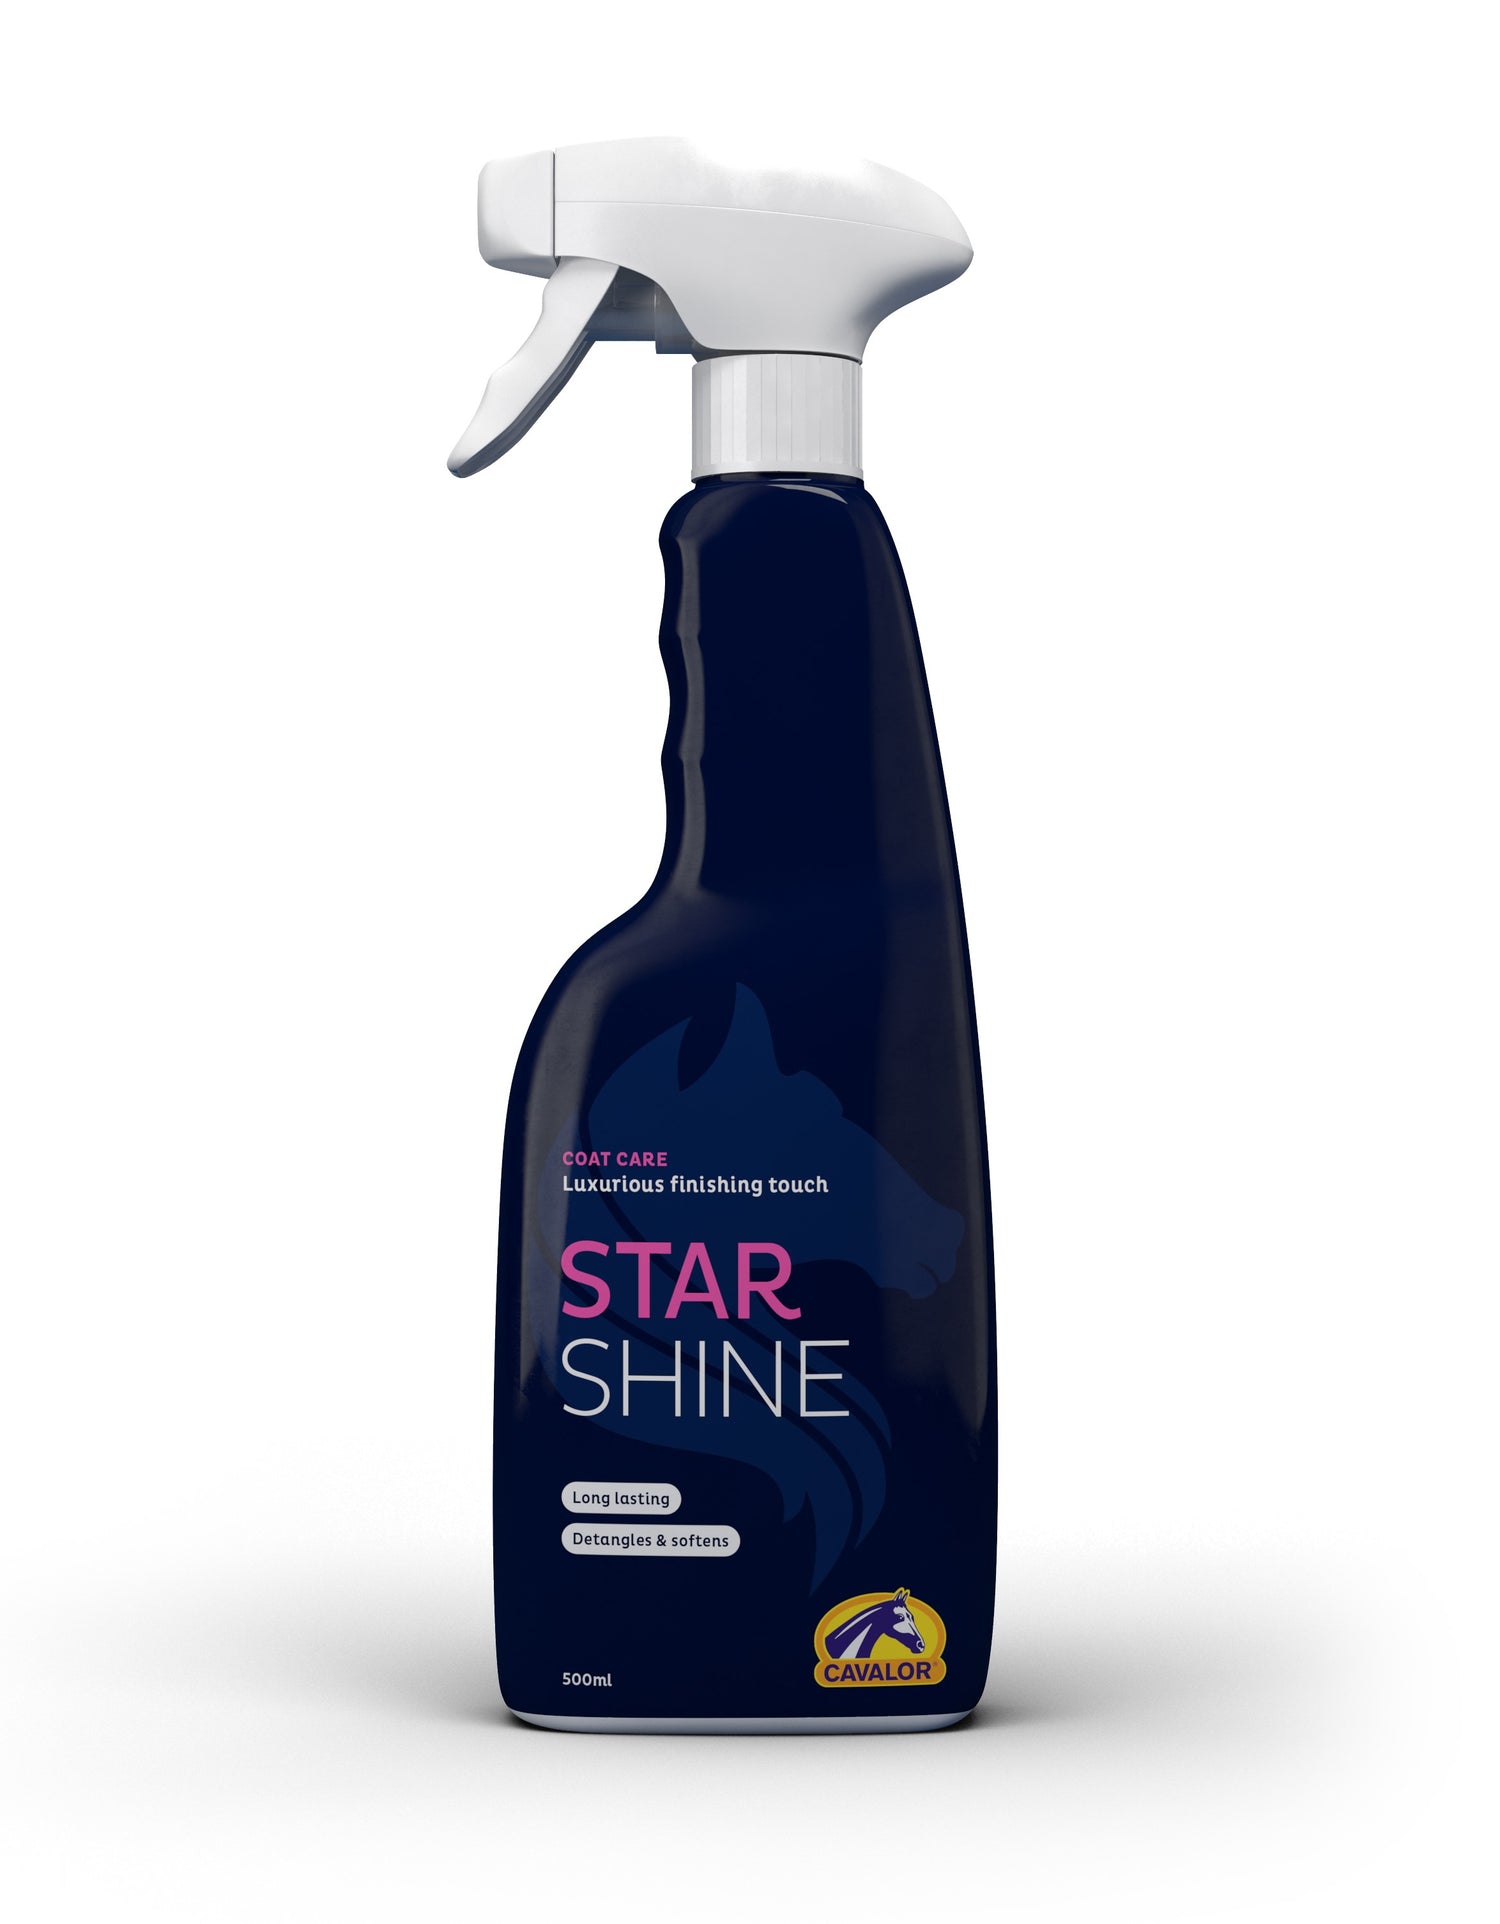 Cavalor ® Star Shine hair conditioner